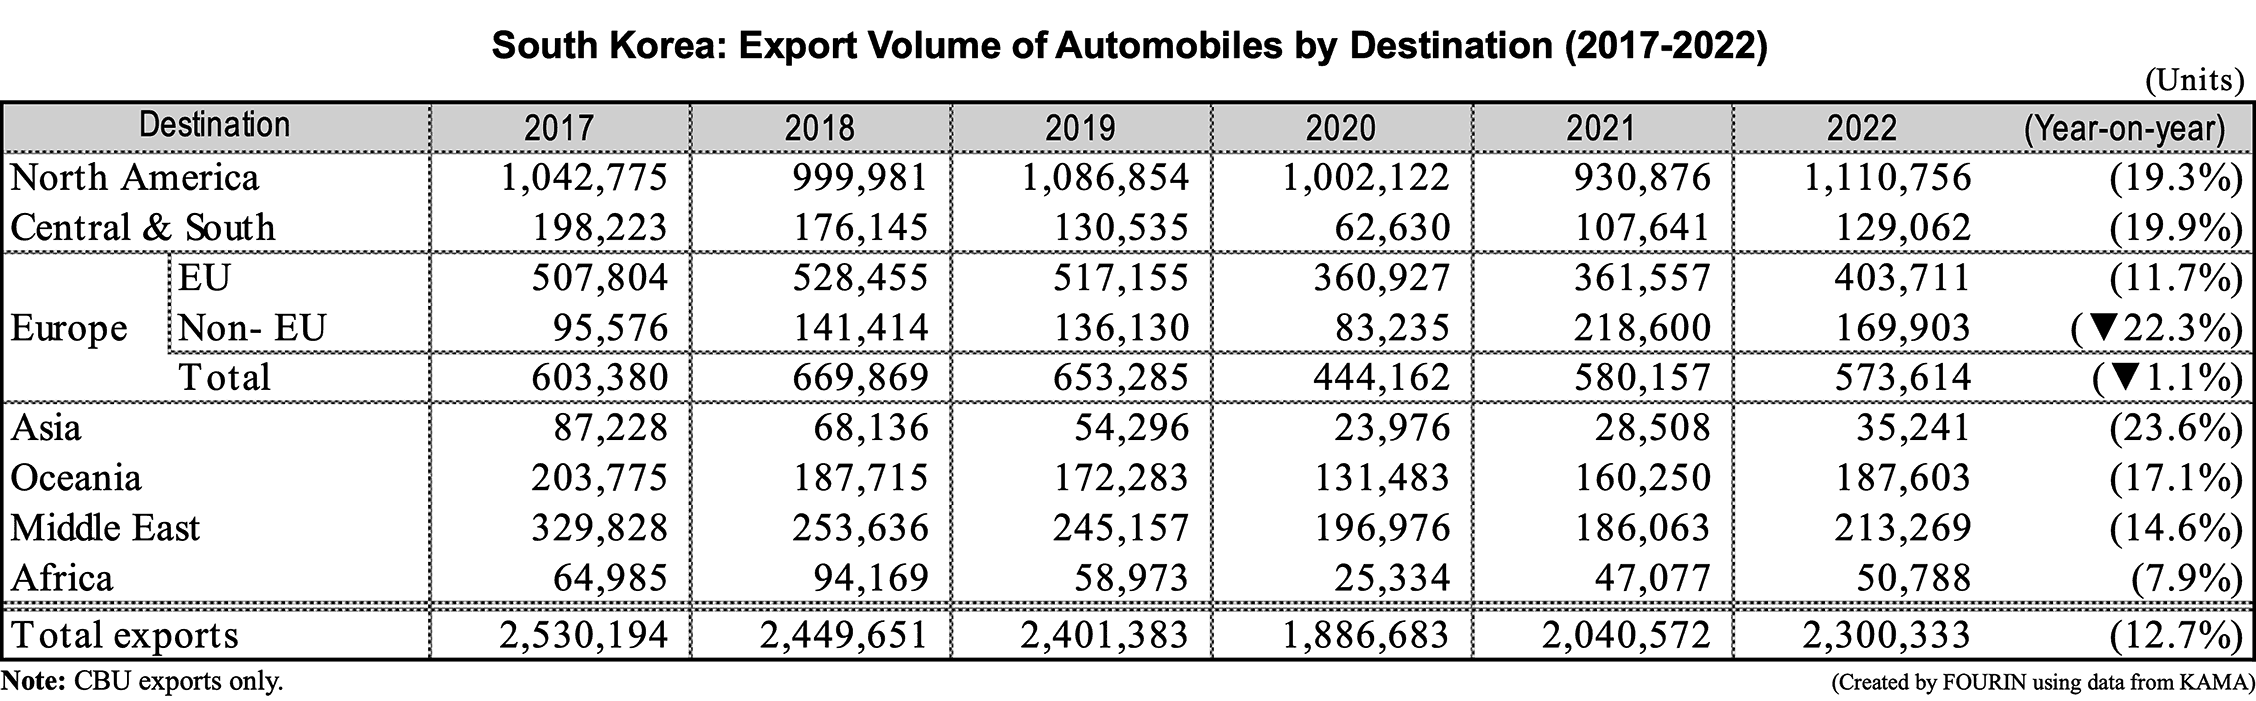 South Korea: Export Volume of Automobiles by Destination (2017-2022)